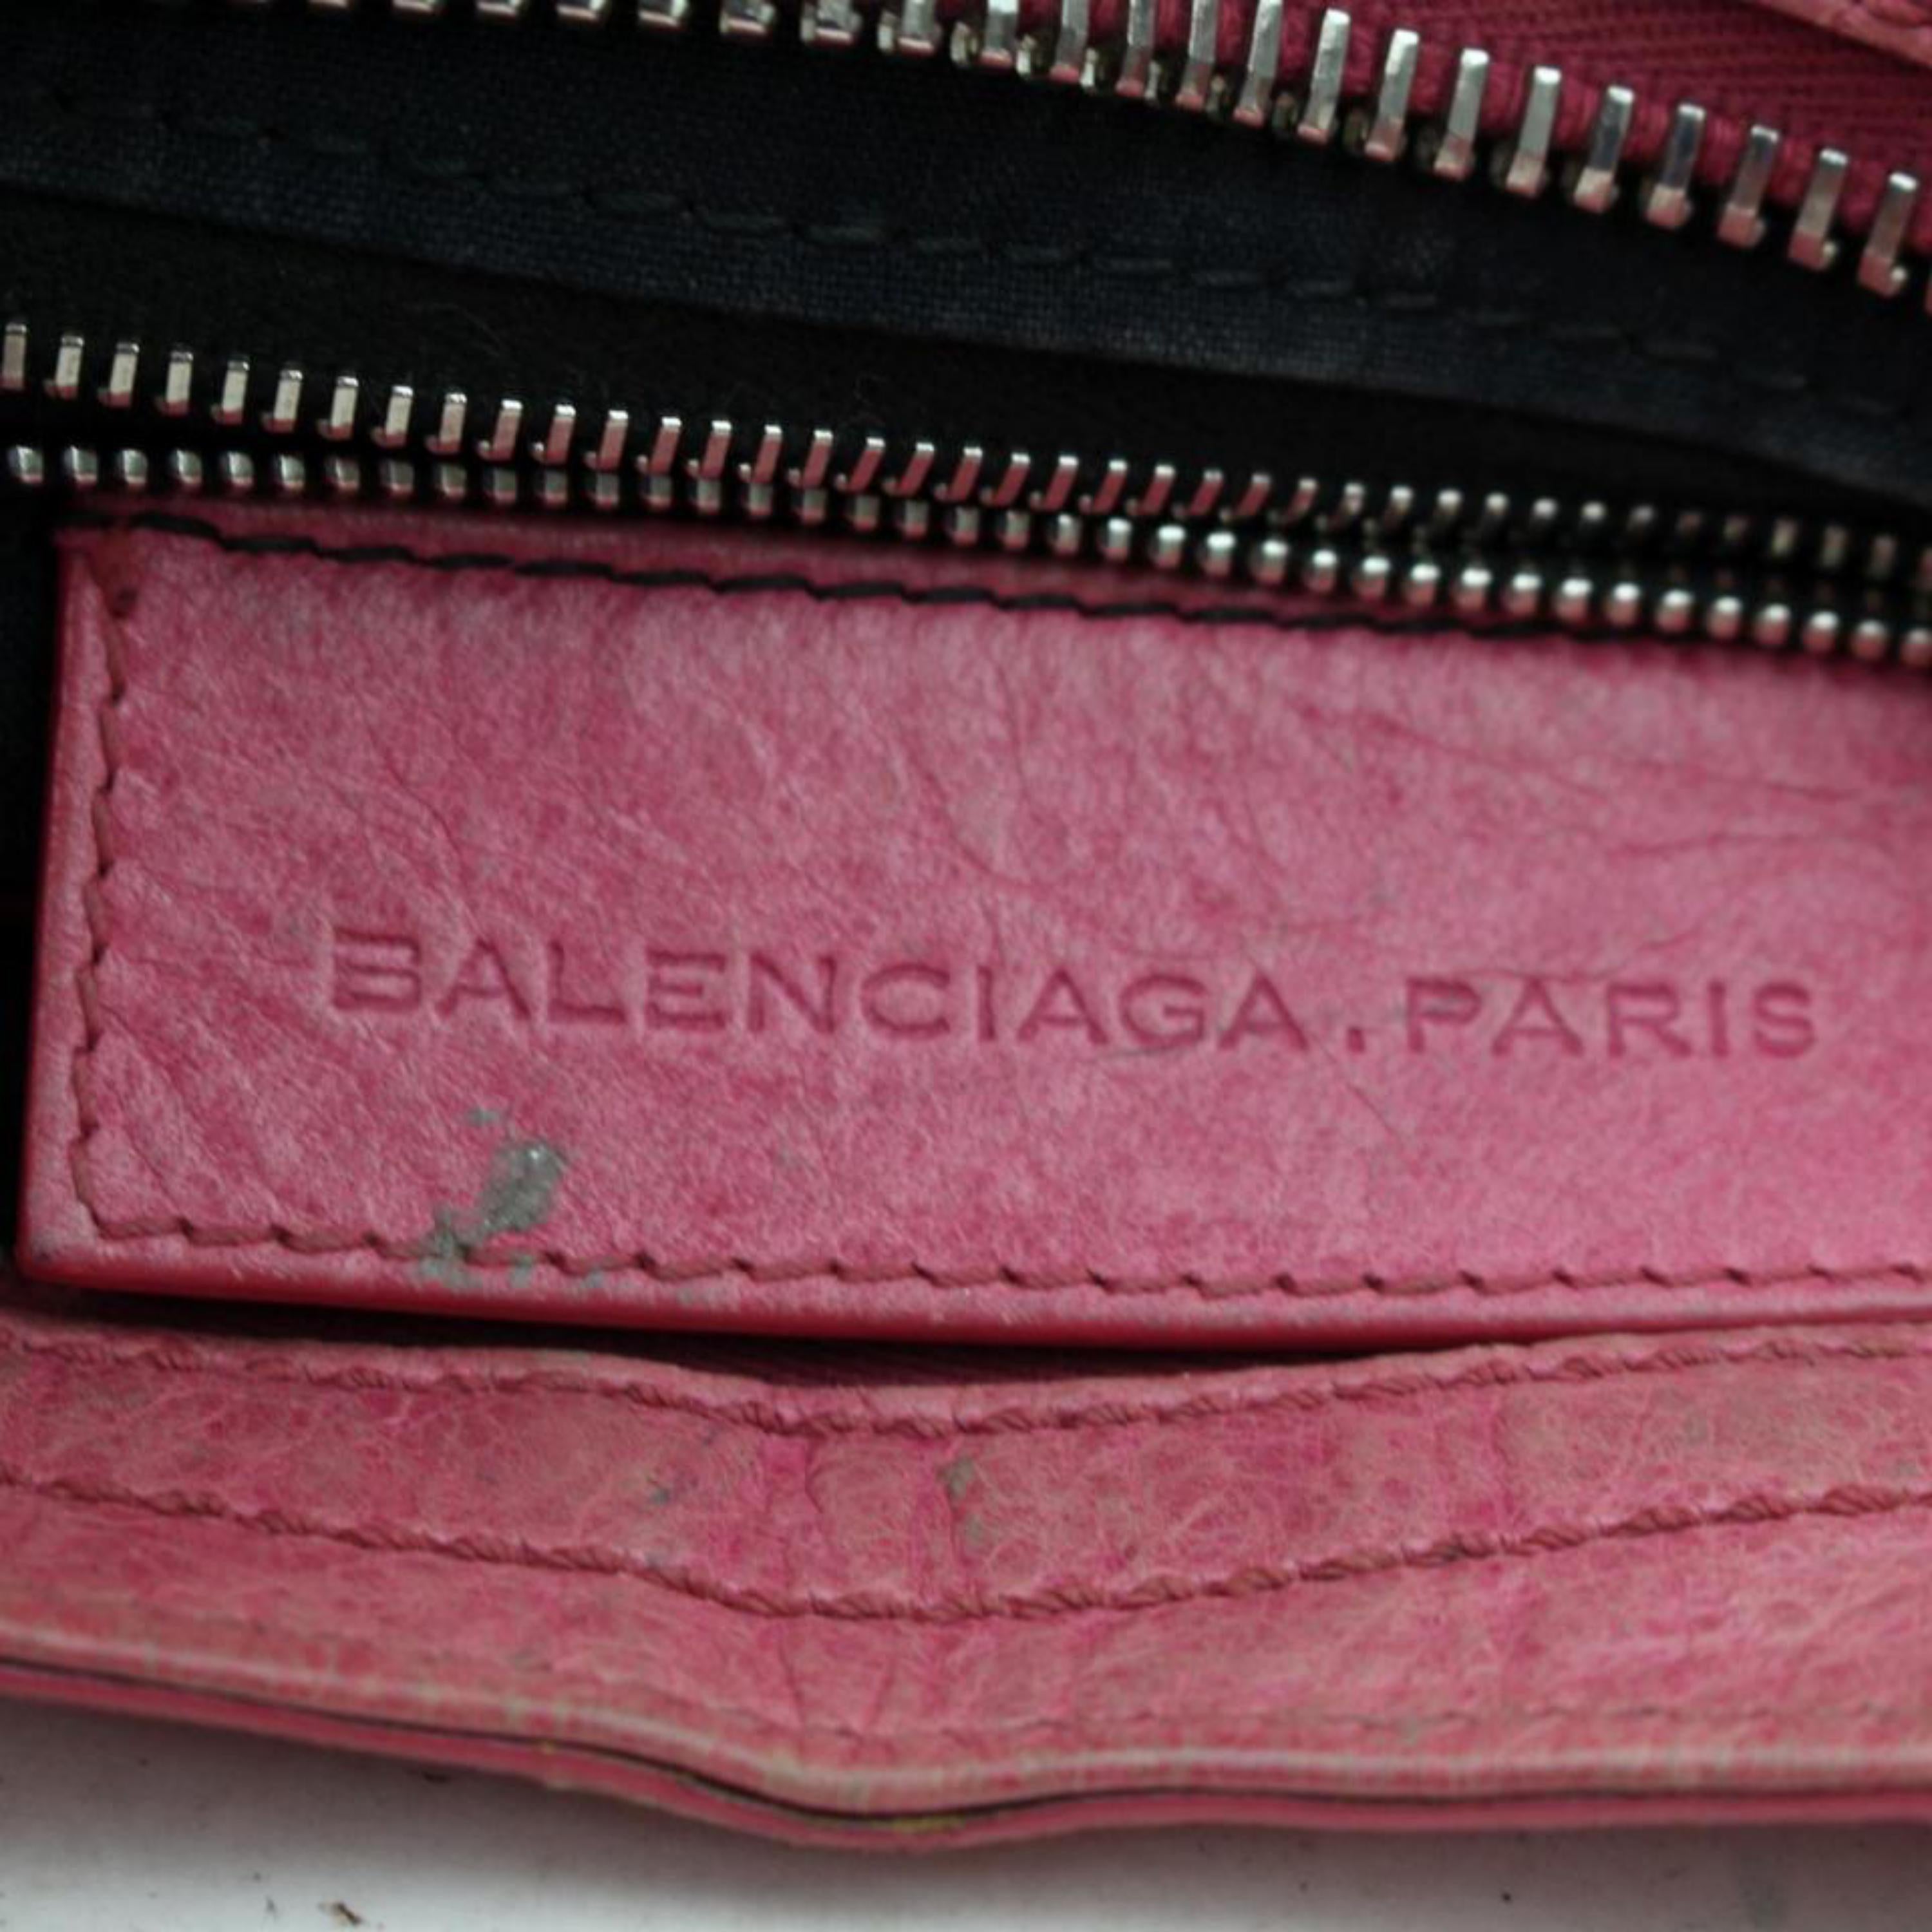 Balenciaga Giant The City Handbag 866732 Pink Leather Satchel For Sale 1